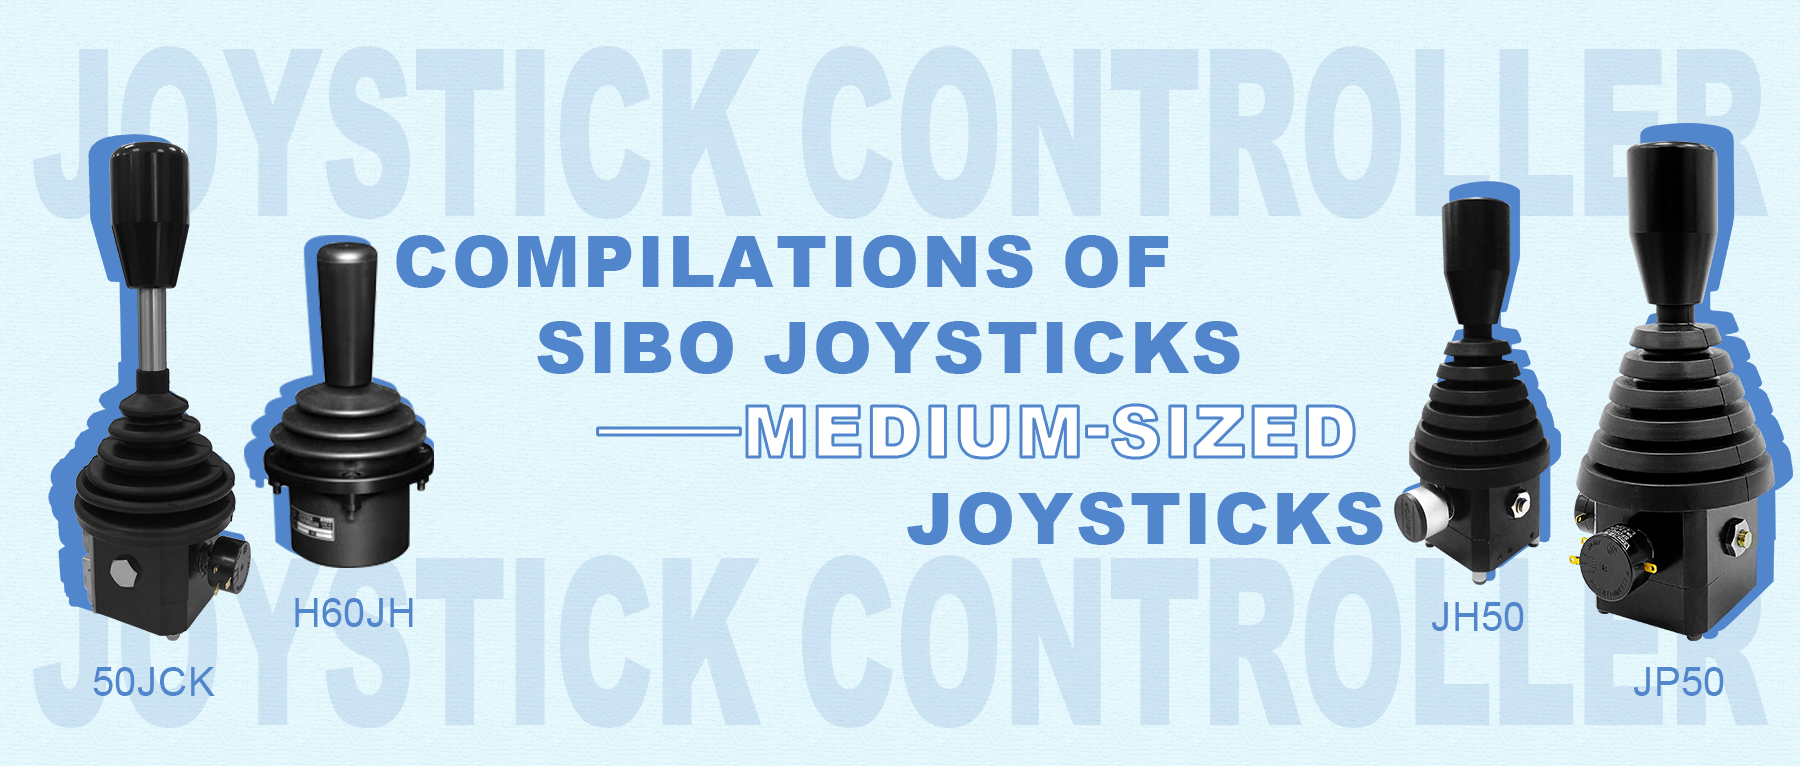 Compilations of SIBO Joysticks --- Medium-sized Joysticks